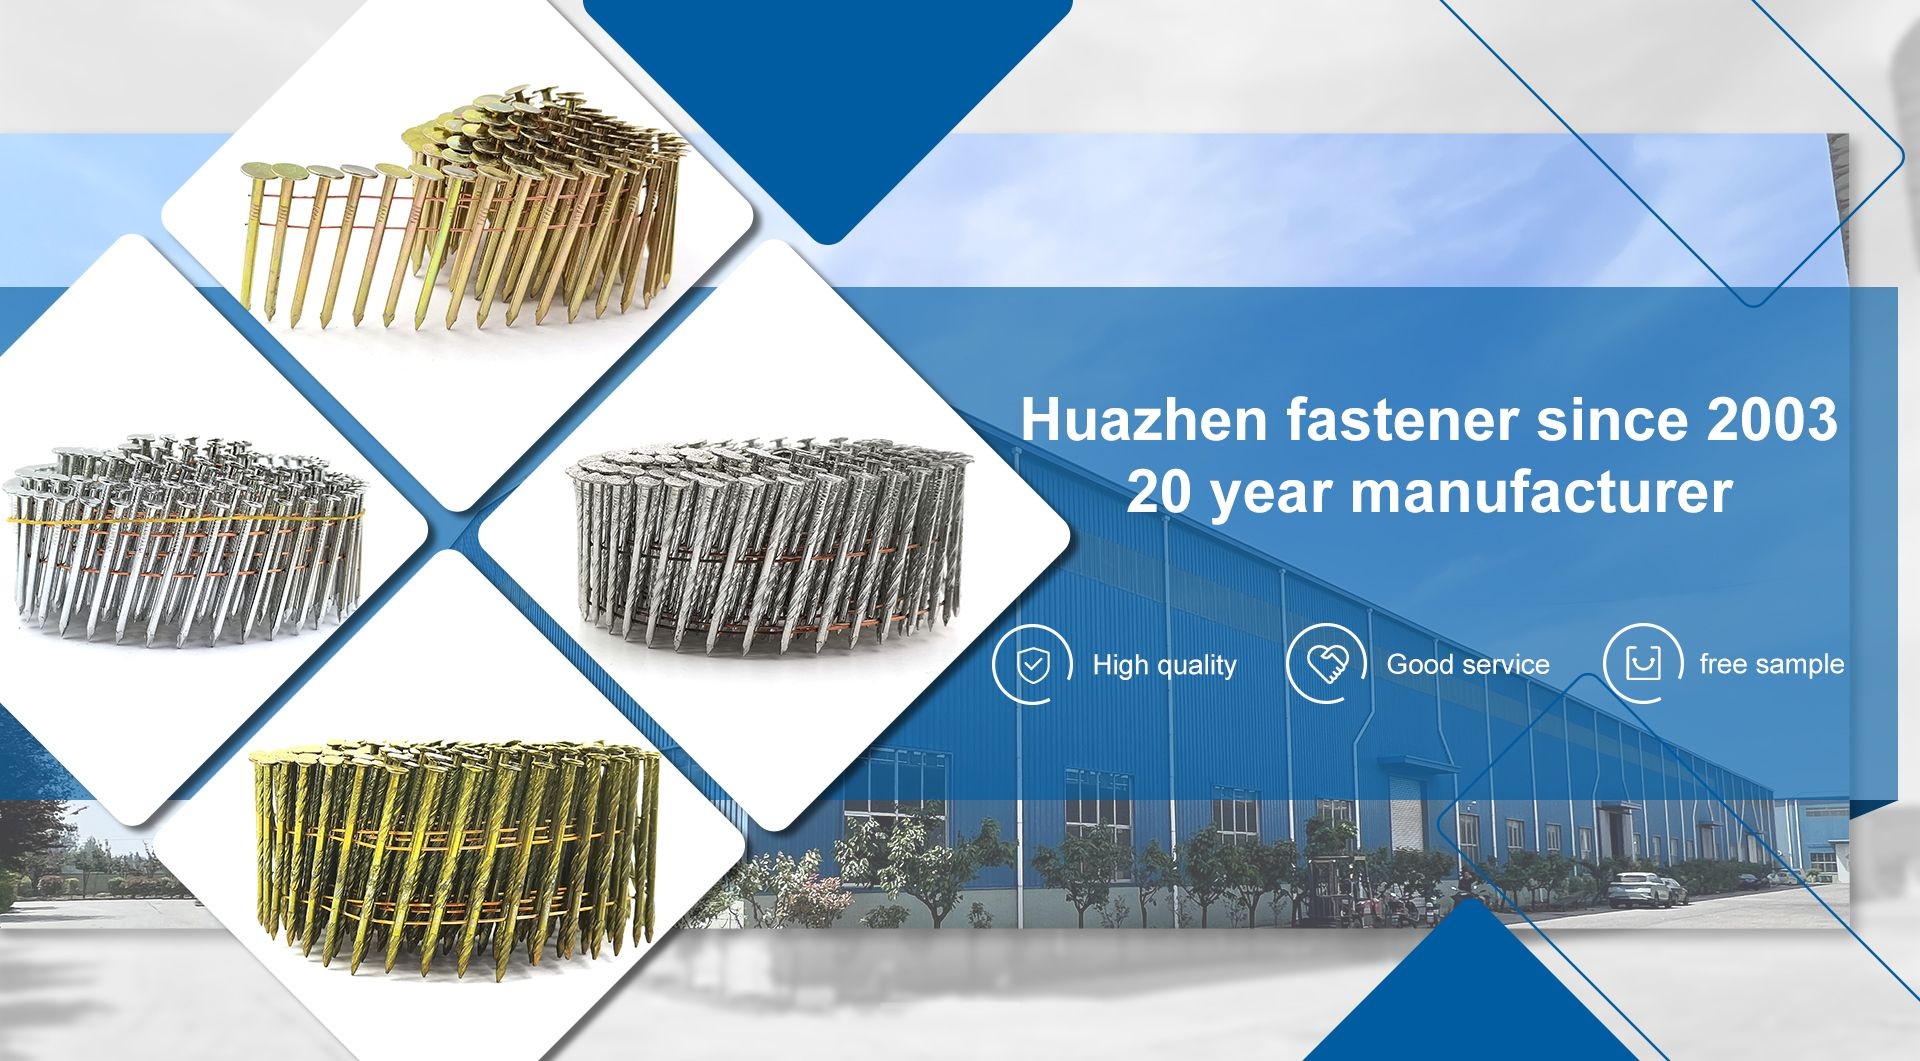 Tianjin Huazhen Fastener Co. Ltd